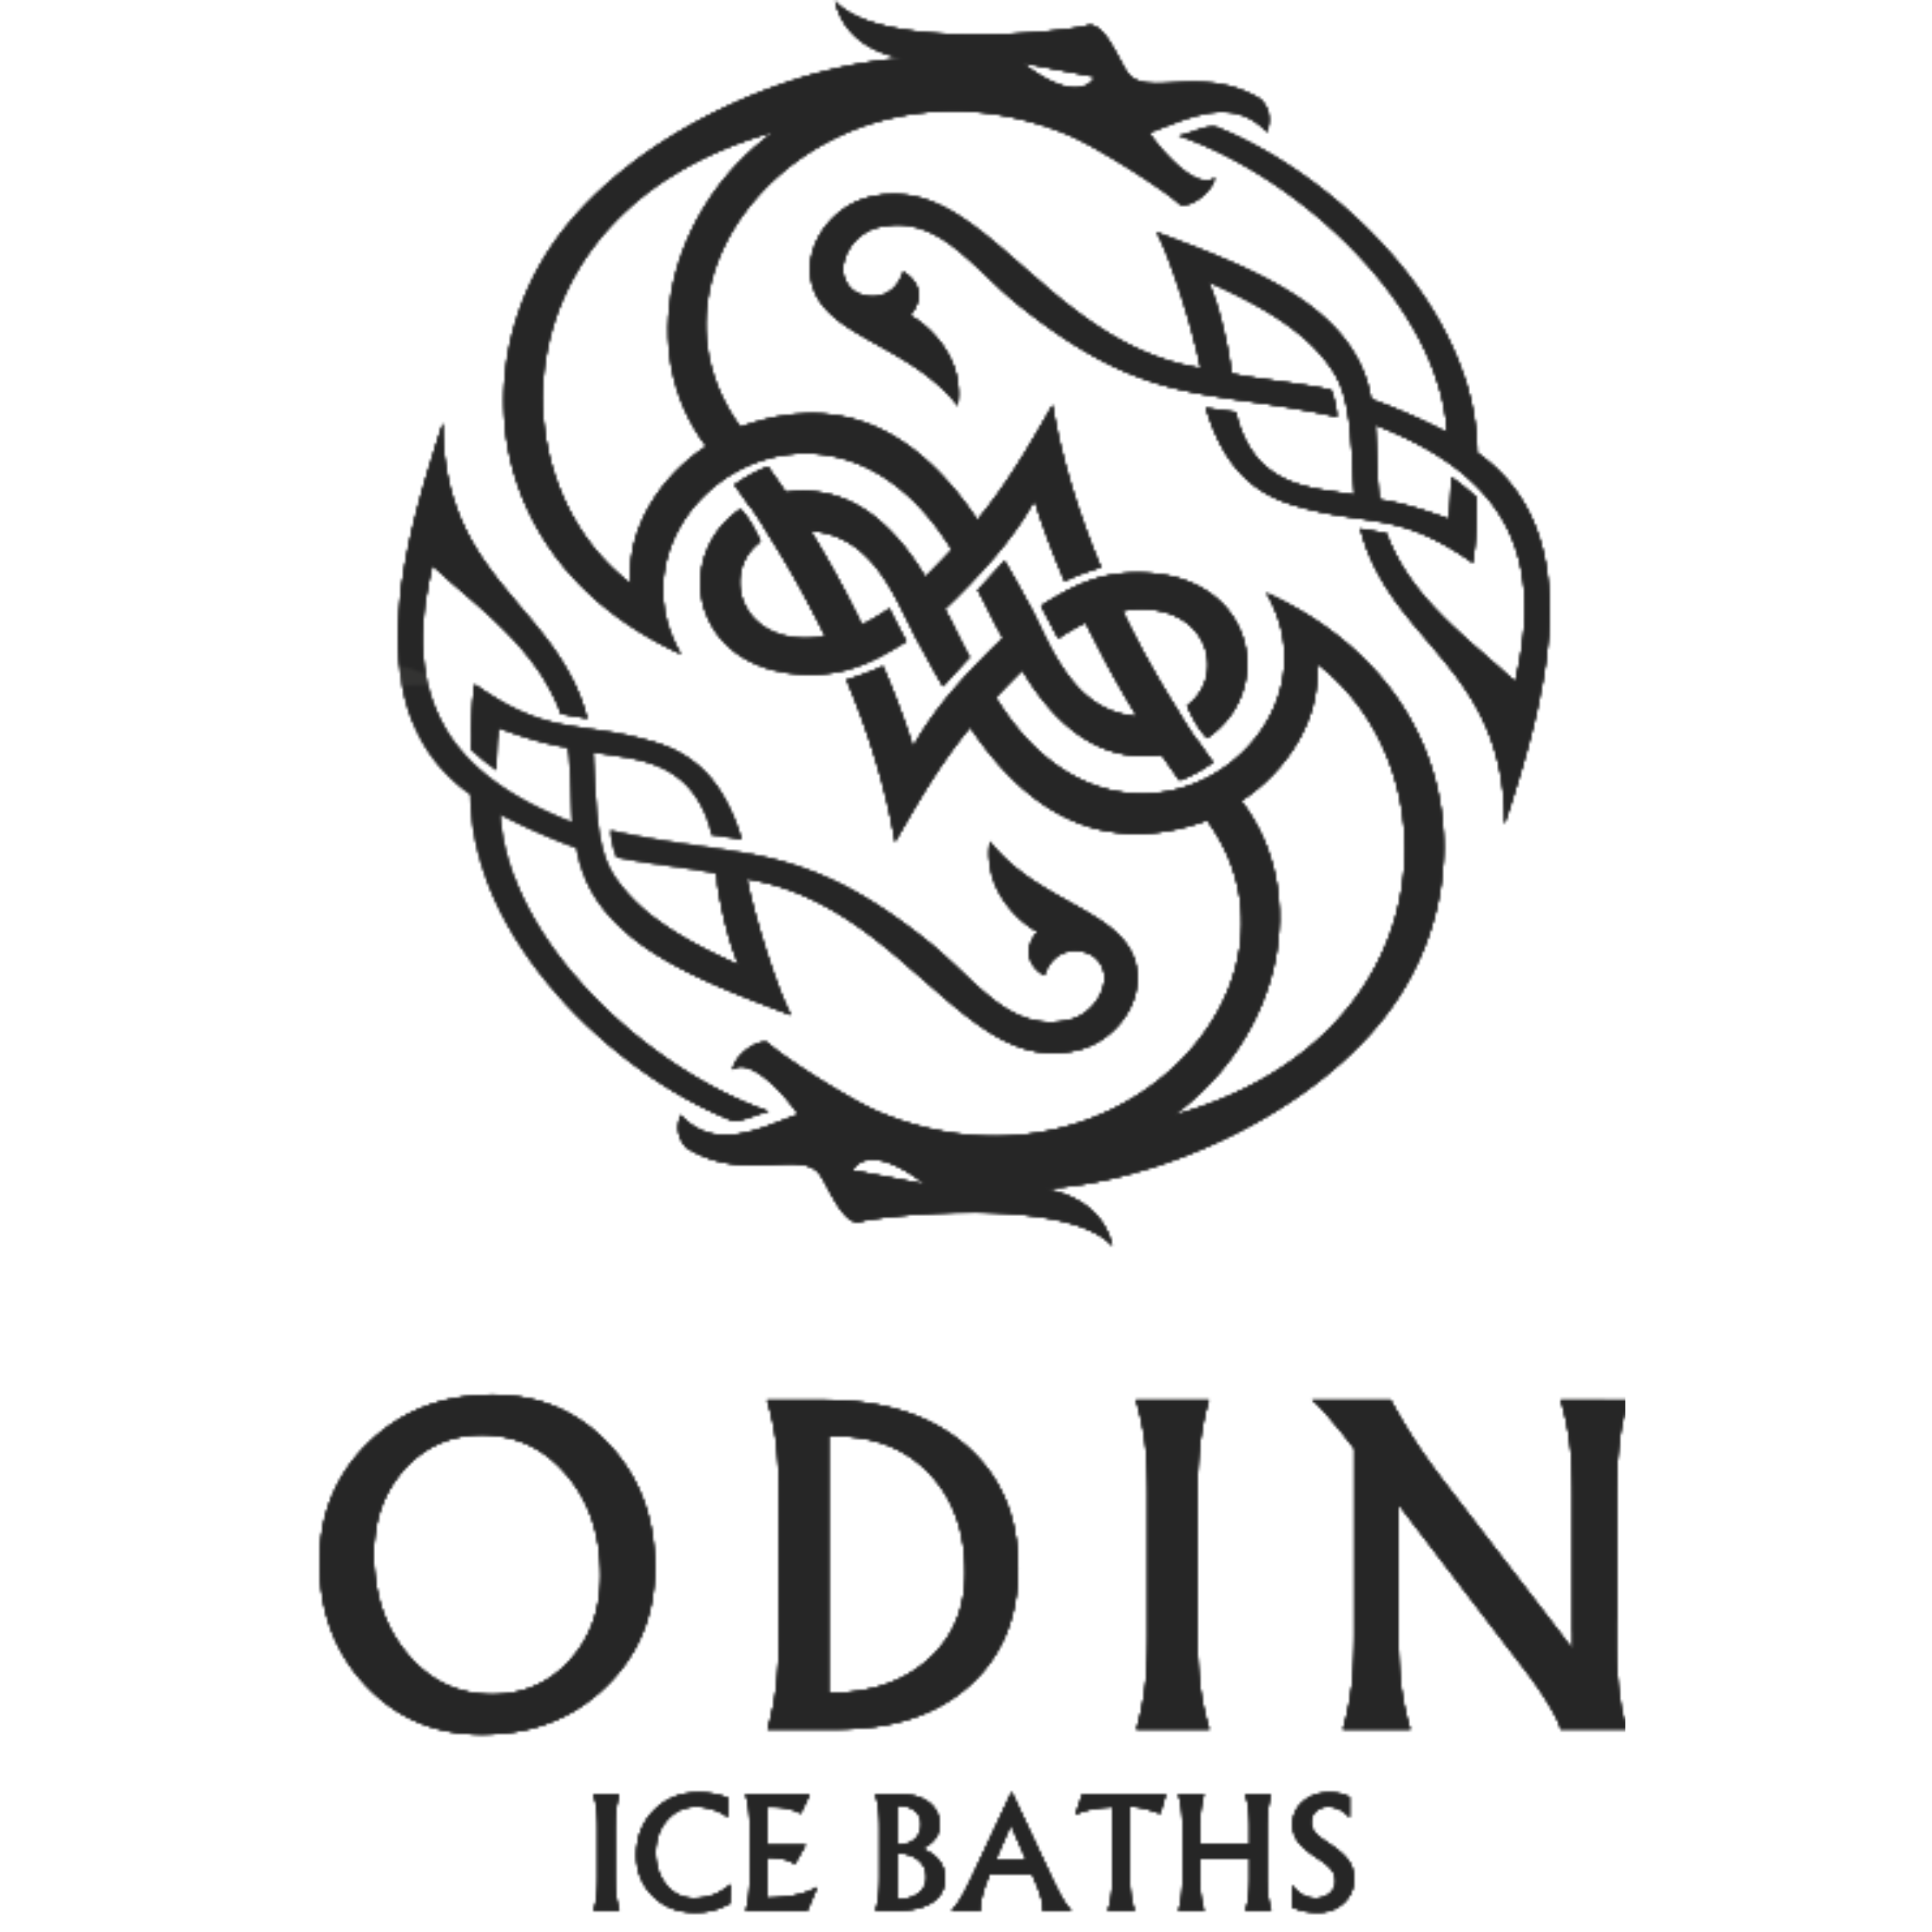 Odin Ice Baths